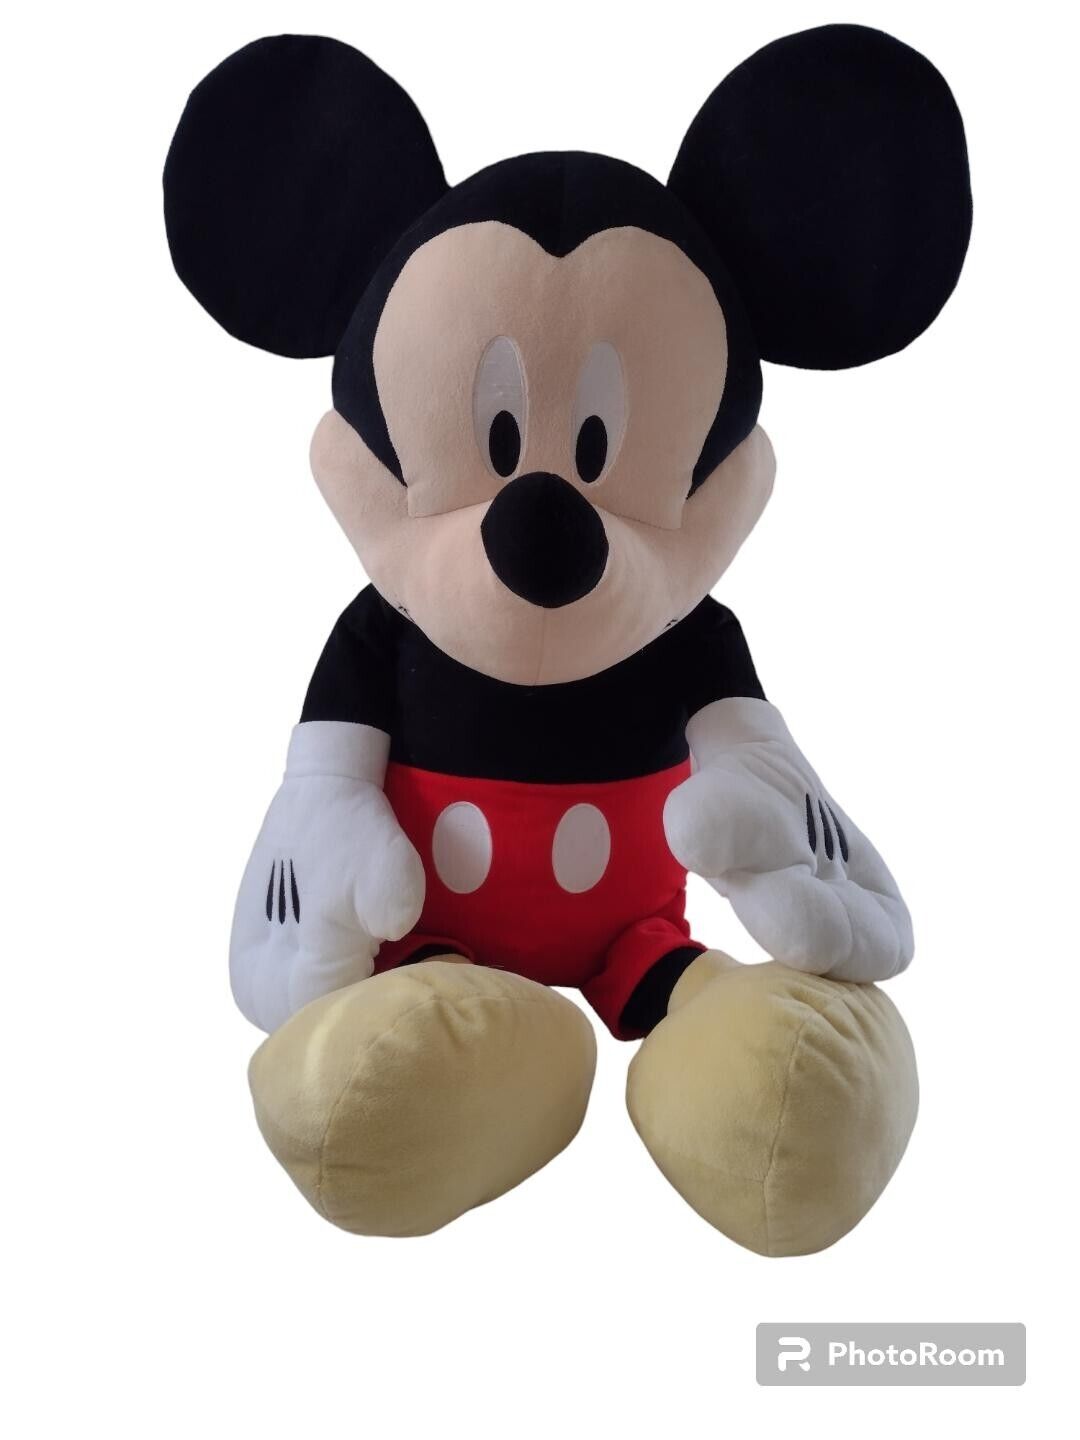 Disney Baby Mickey Mouse Jumbo Stuffed Animal Plush Toy 36 Inches